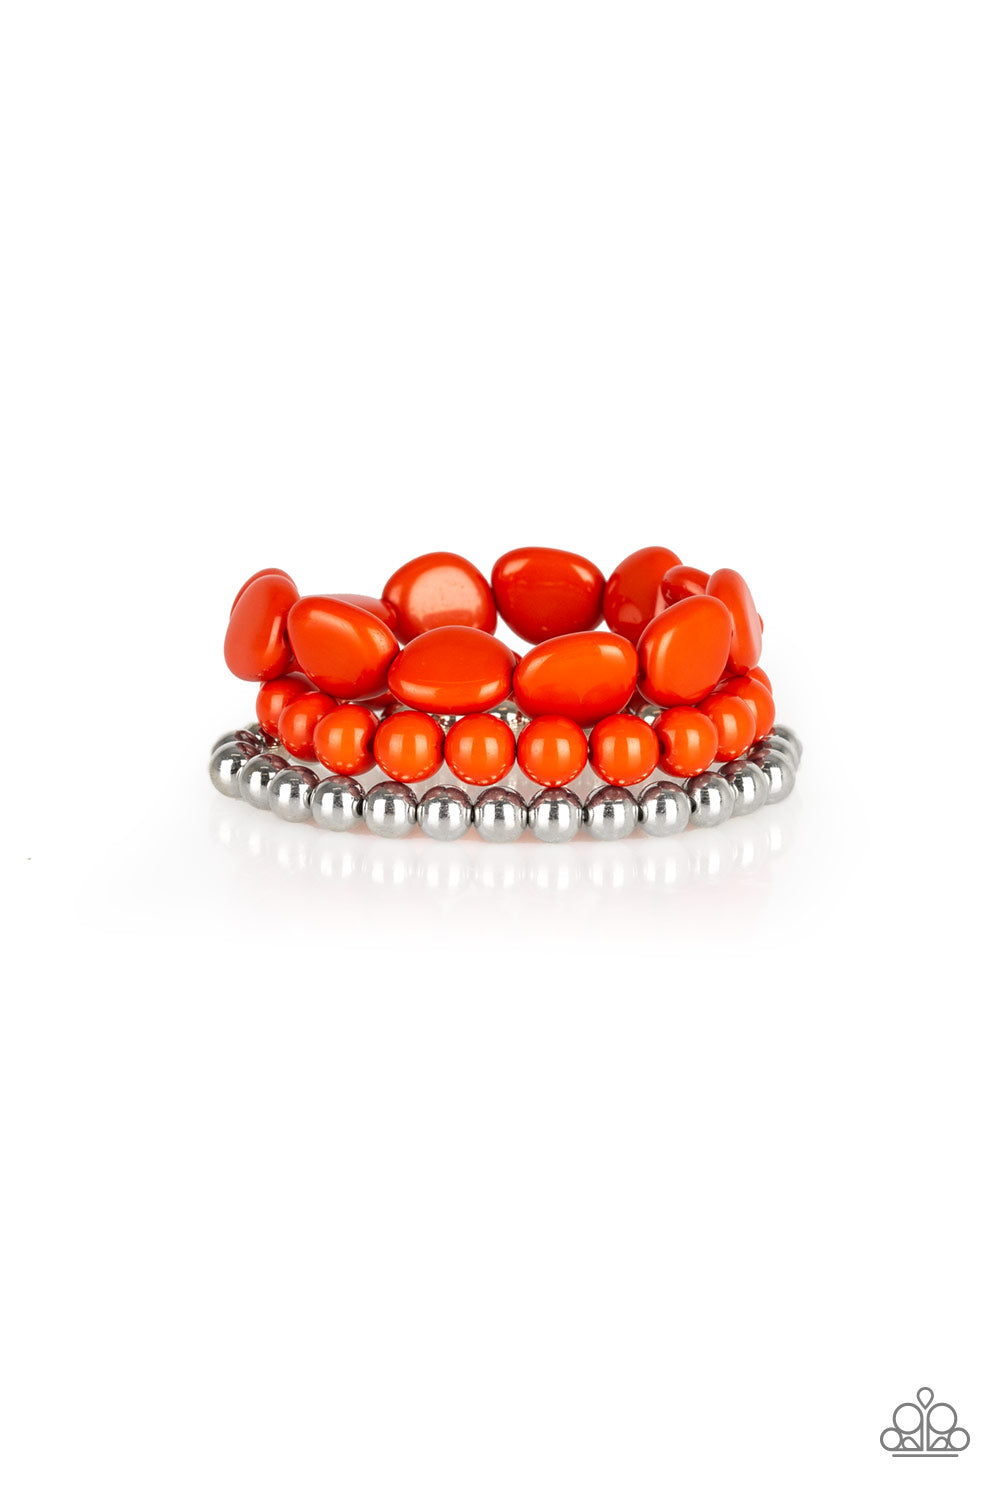 Color Venture - Orange and Silver Bracelet - Chic Jewelry Boutique